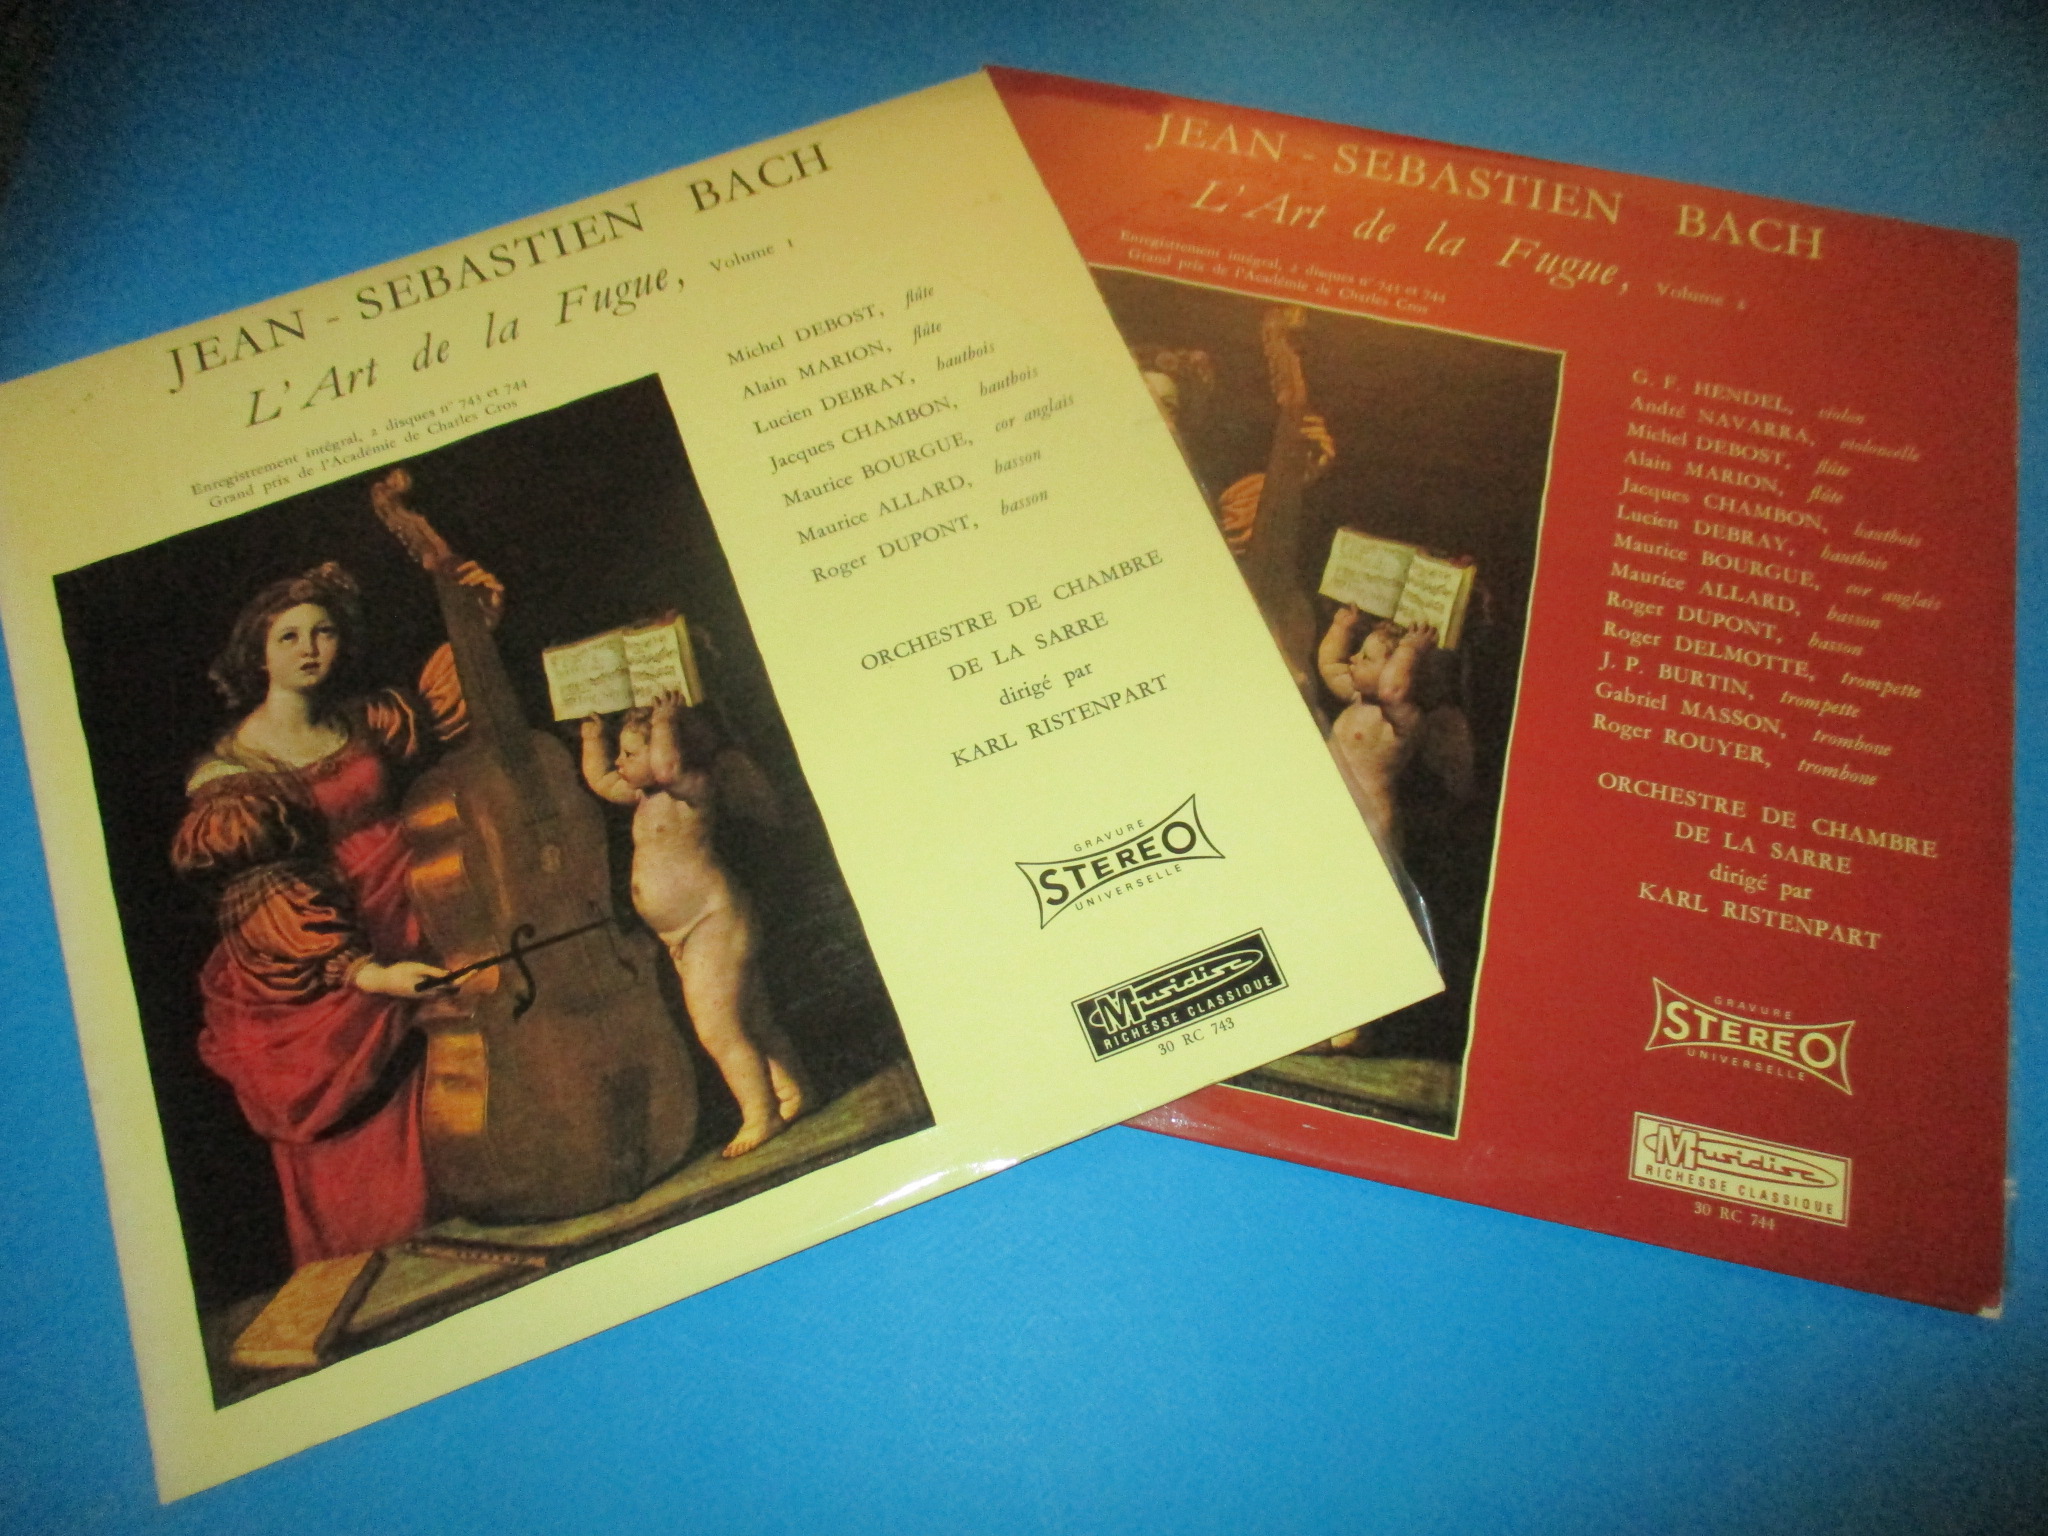 Lot 2 disques Jean-Sebastien Bach, L\'Art de la Fugue, Orchestre de chambre de la Sarre dirigé par Karl Ristenpart, 2 x 33 tours Musidisc